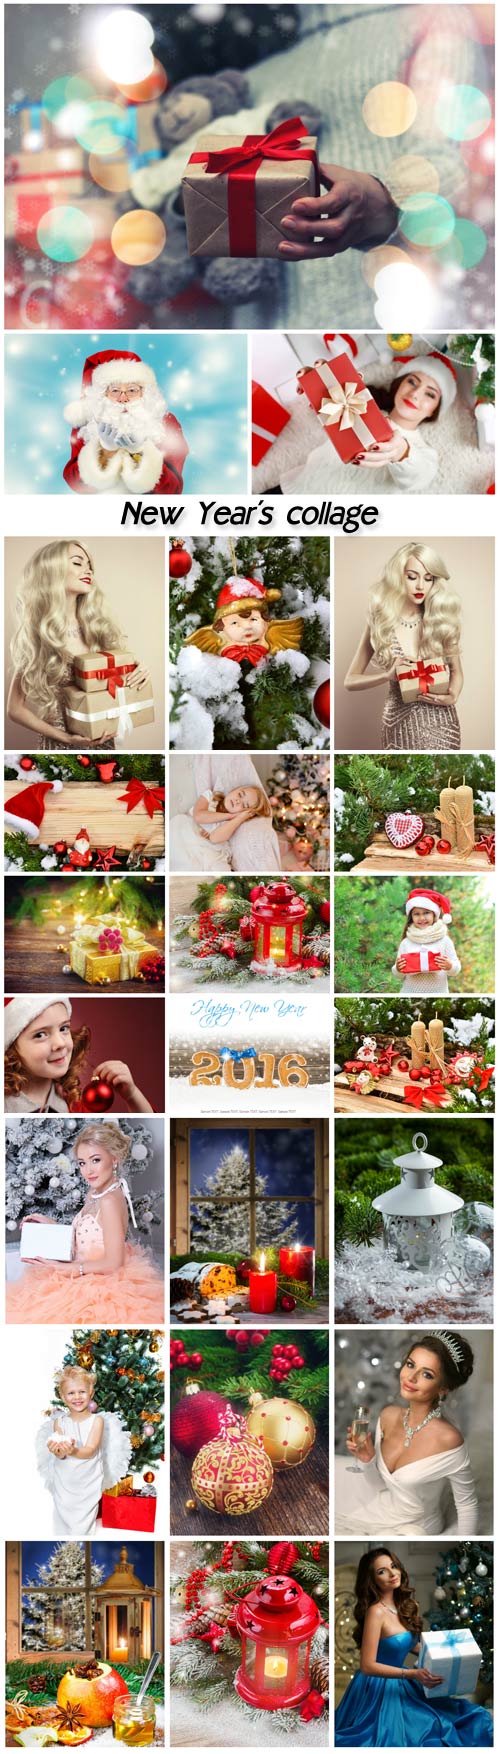 New Year collage, christmas, women, children